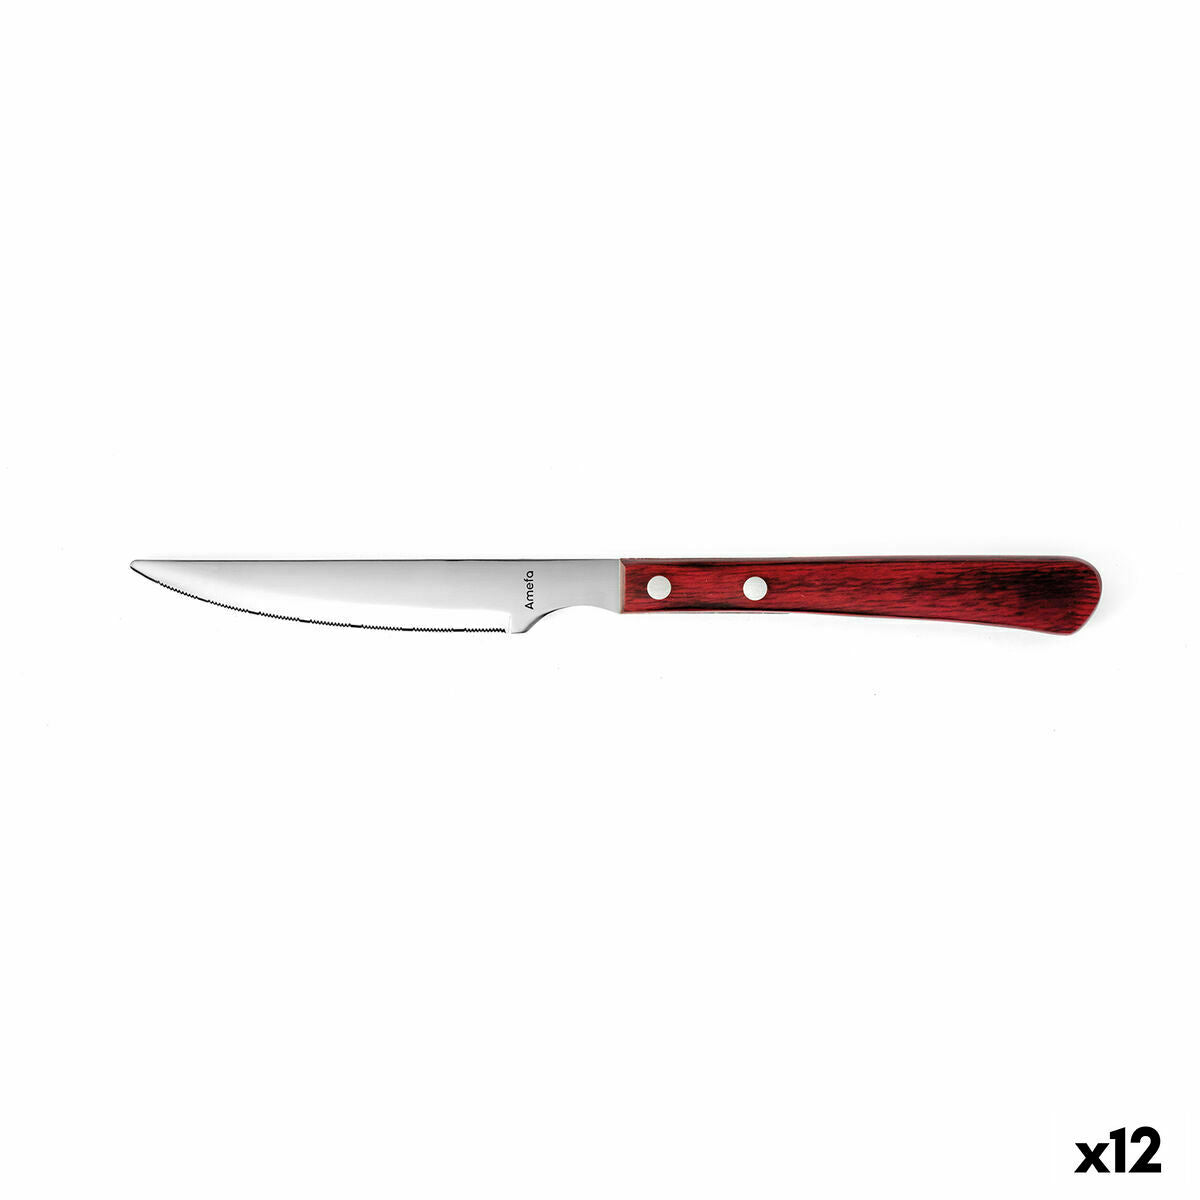 Knife set Brasero - 12 pieces